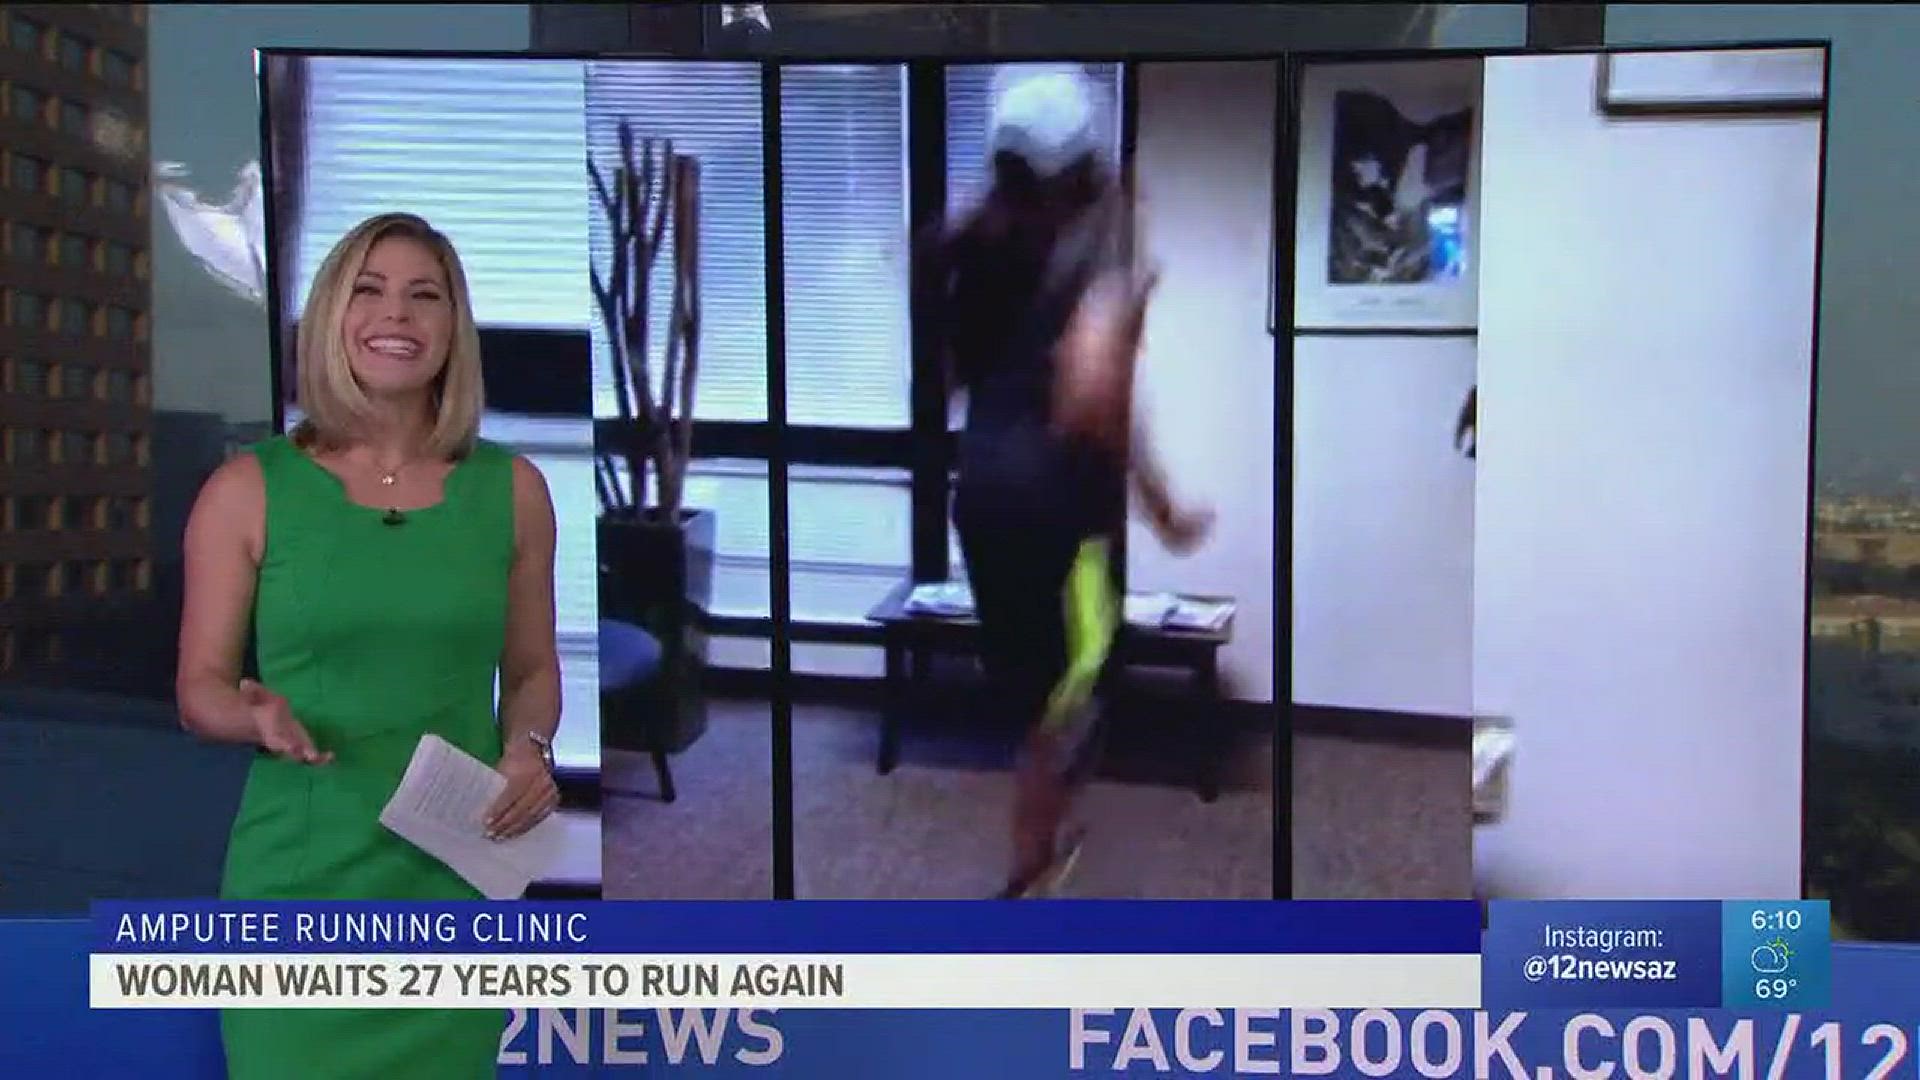 Woman waits 27 years to run again